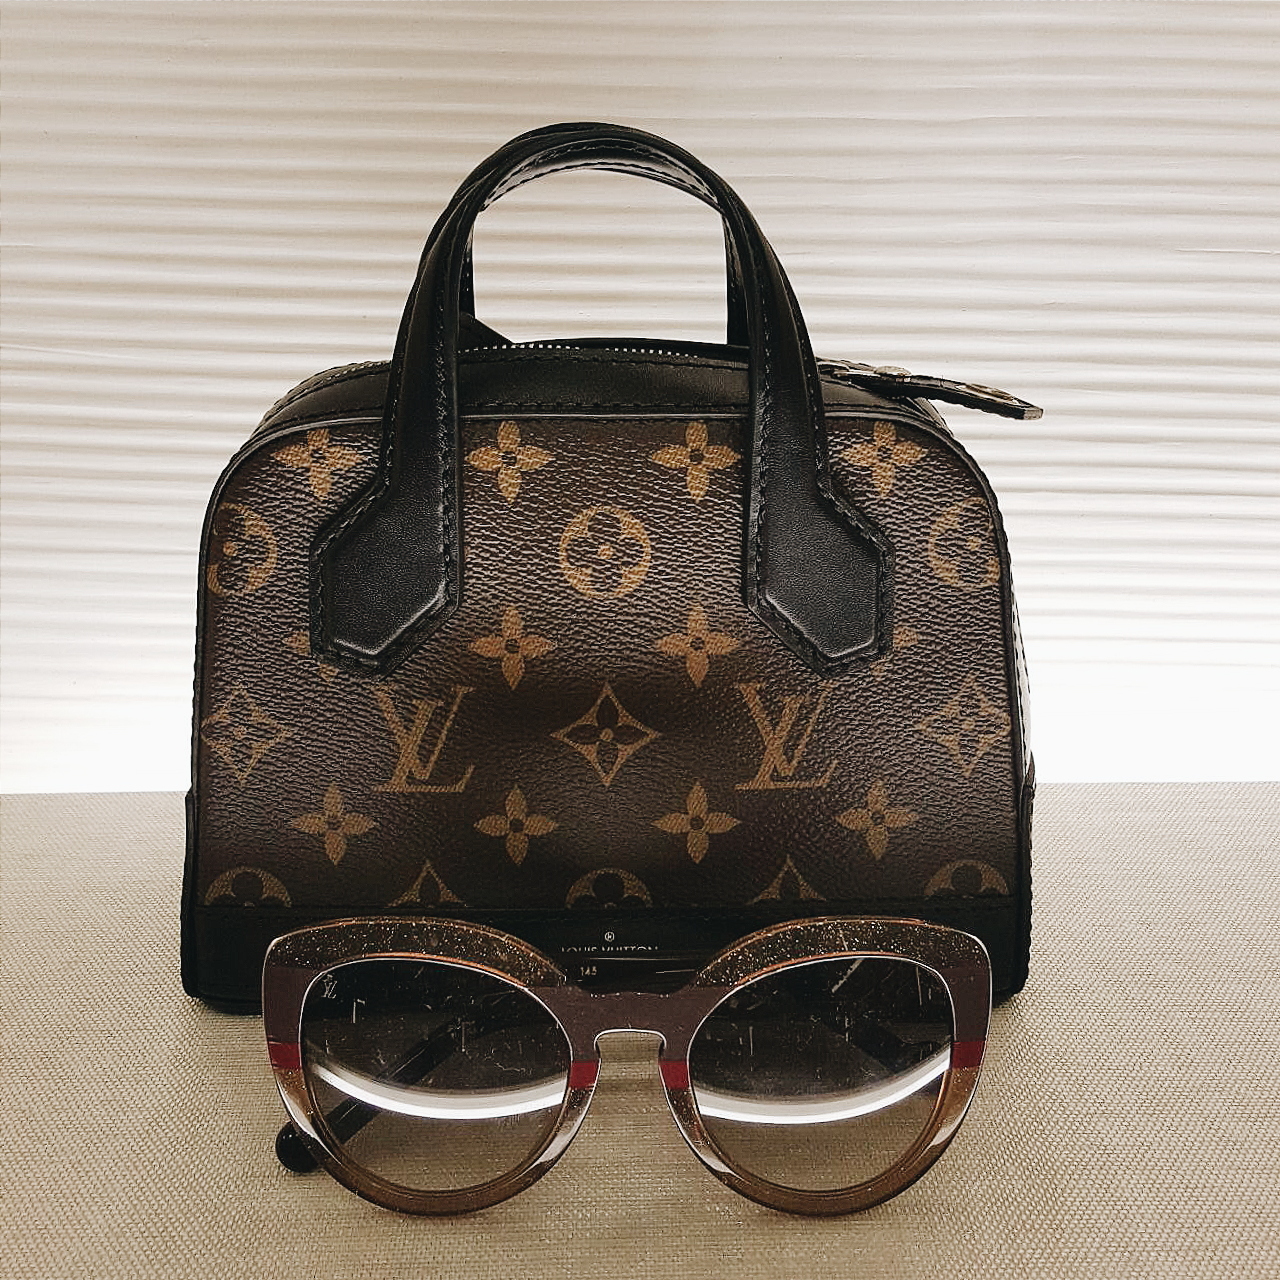 Bag Review: Louis Vuitton Monogram Nano Dora | The Bag Hag Diaries